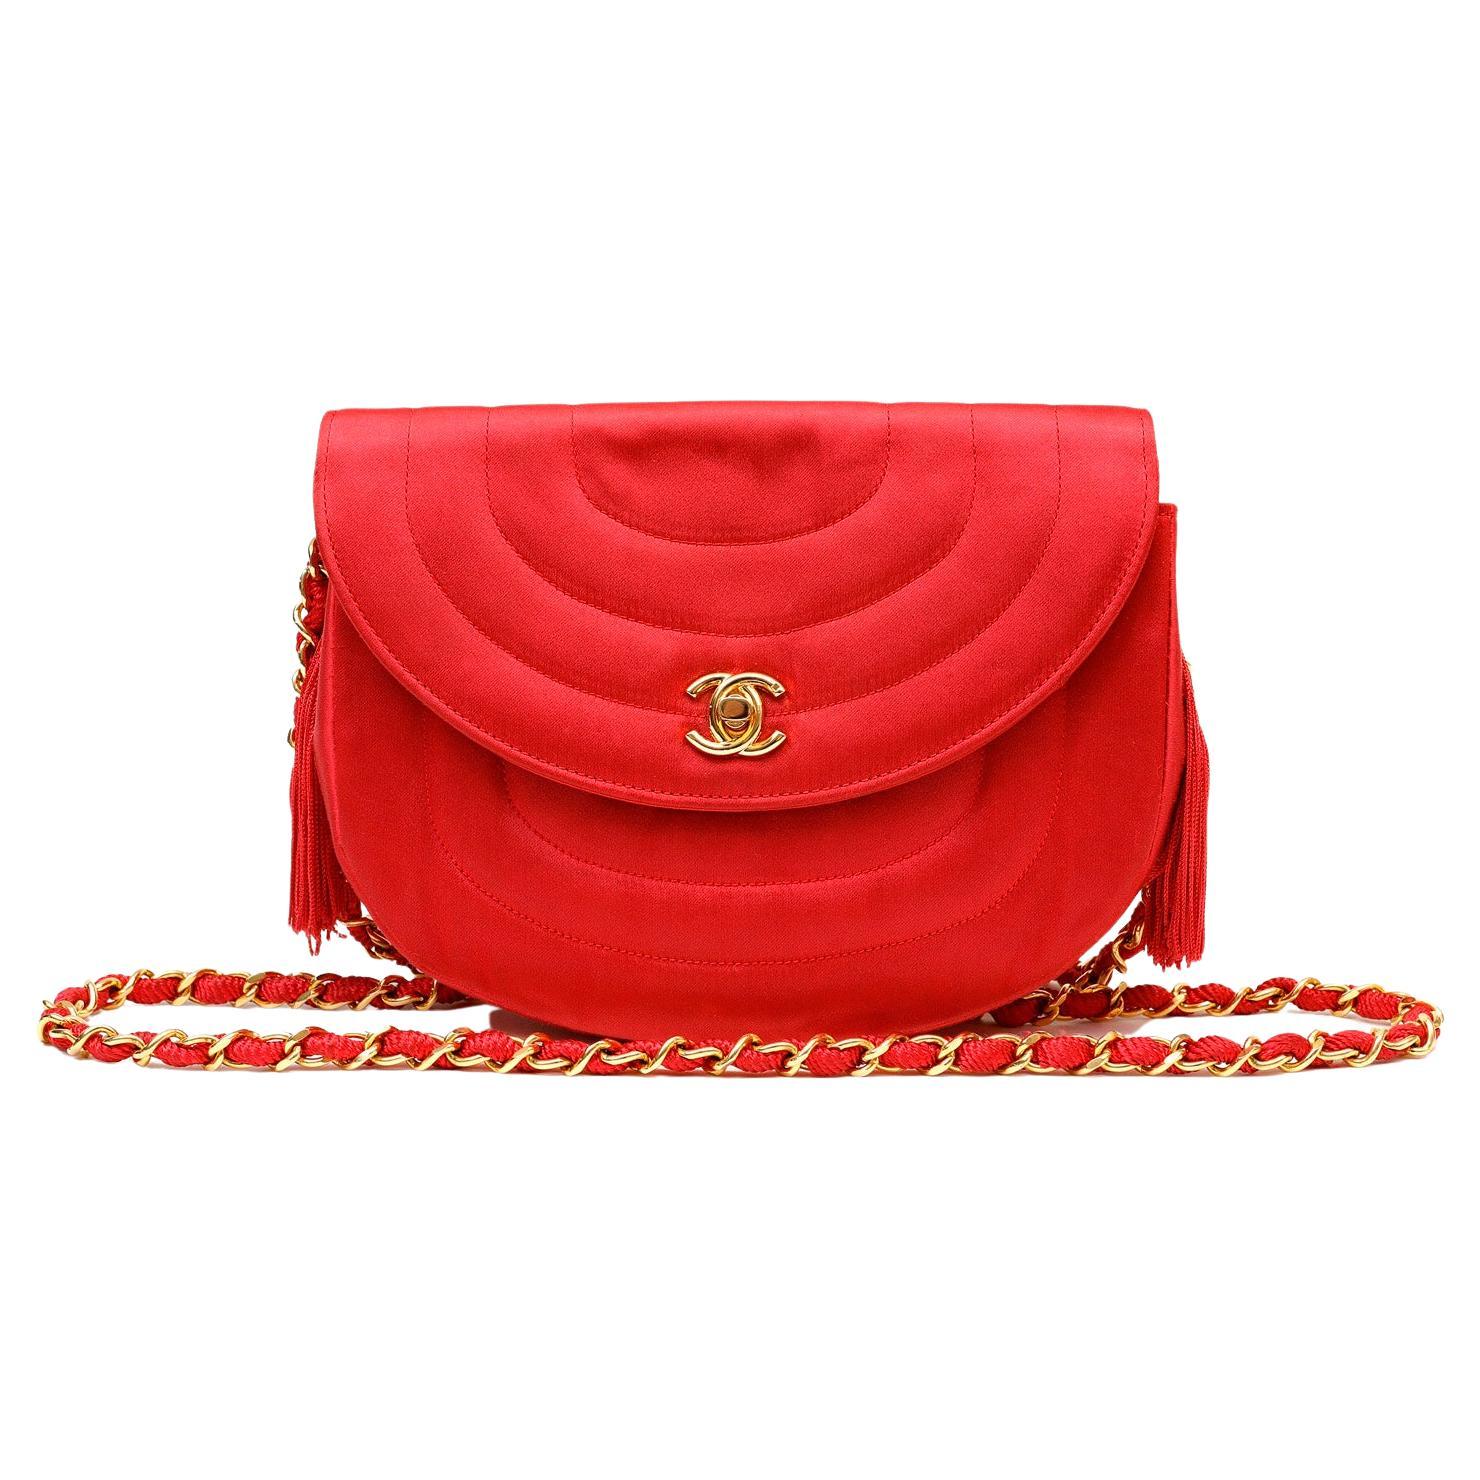 Chanel Red Satin Bag - 15 For Sale on 1stDibs